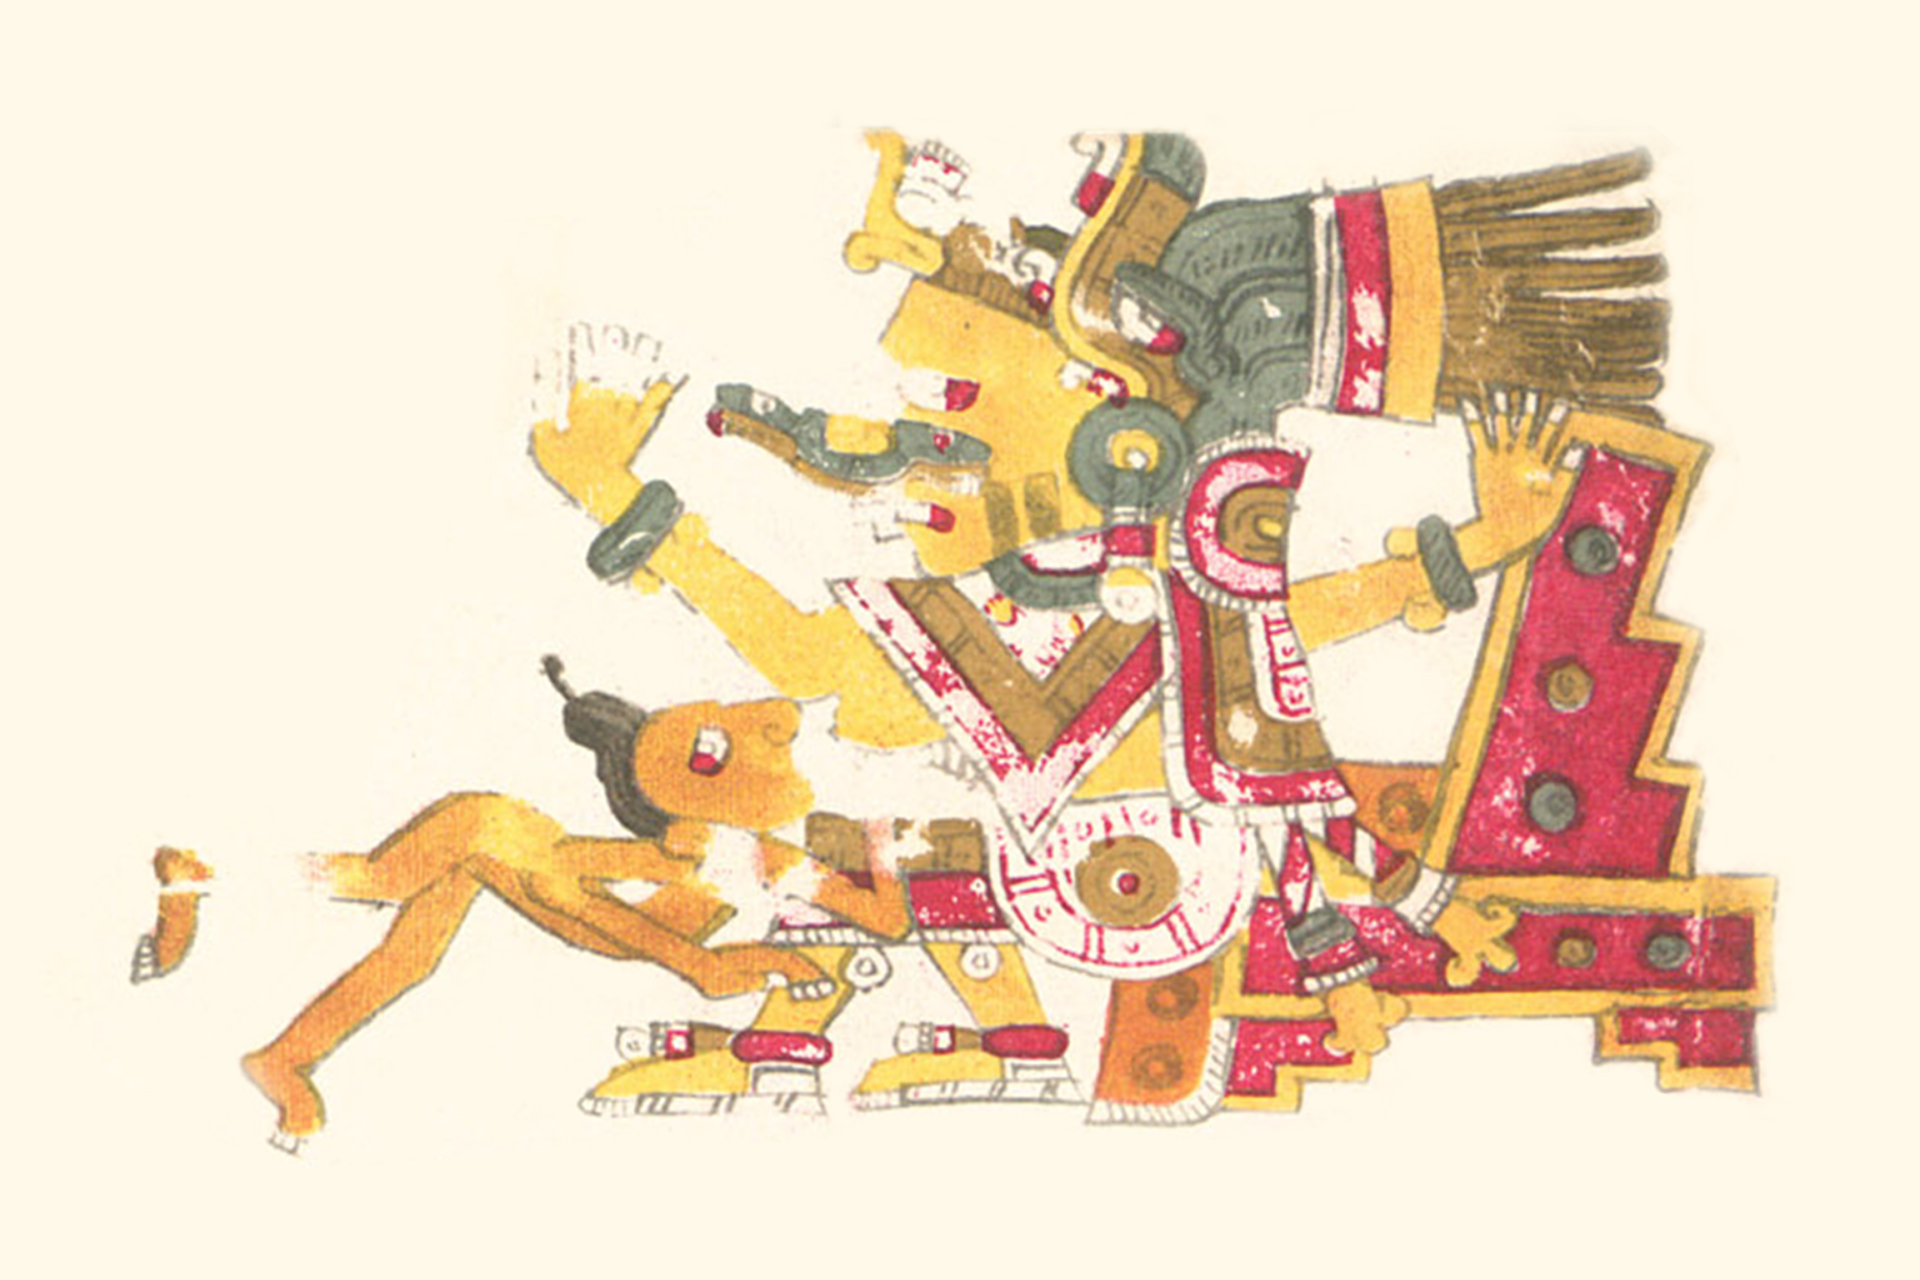 Aztec Demons Magic: Andraplatingat, the Demon of Persuasion and